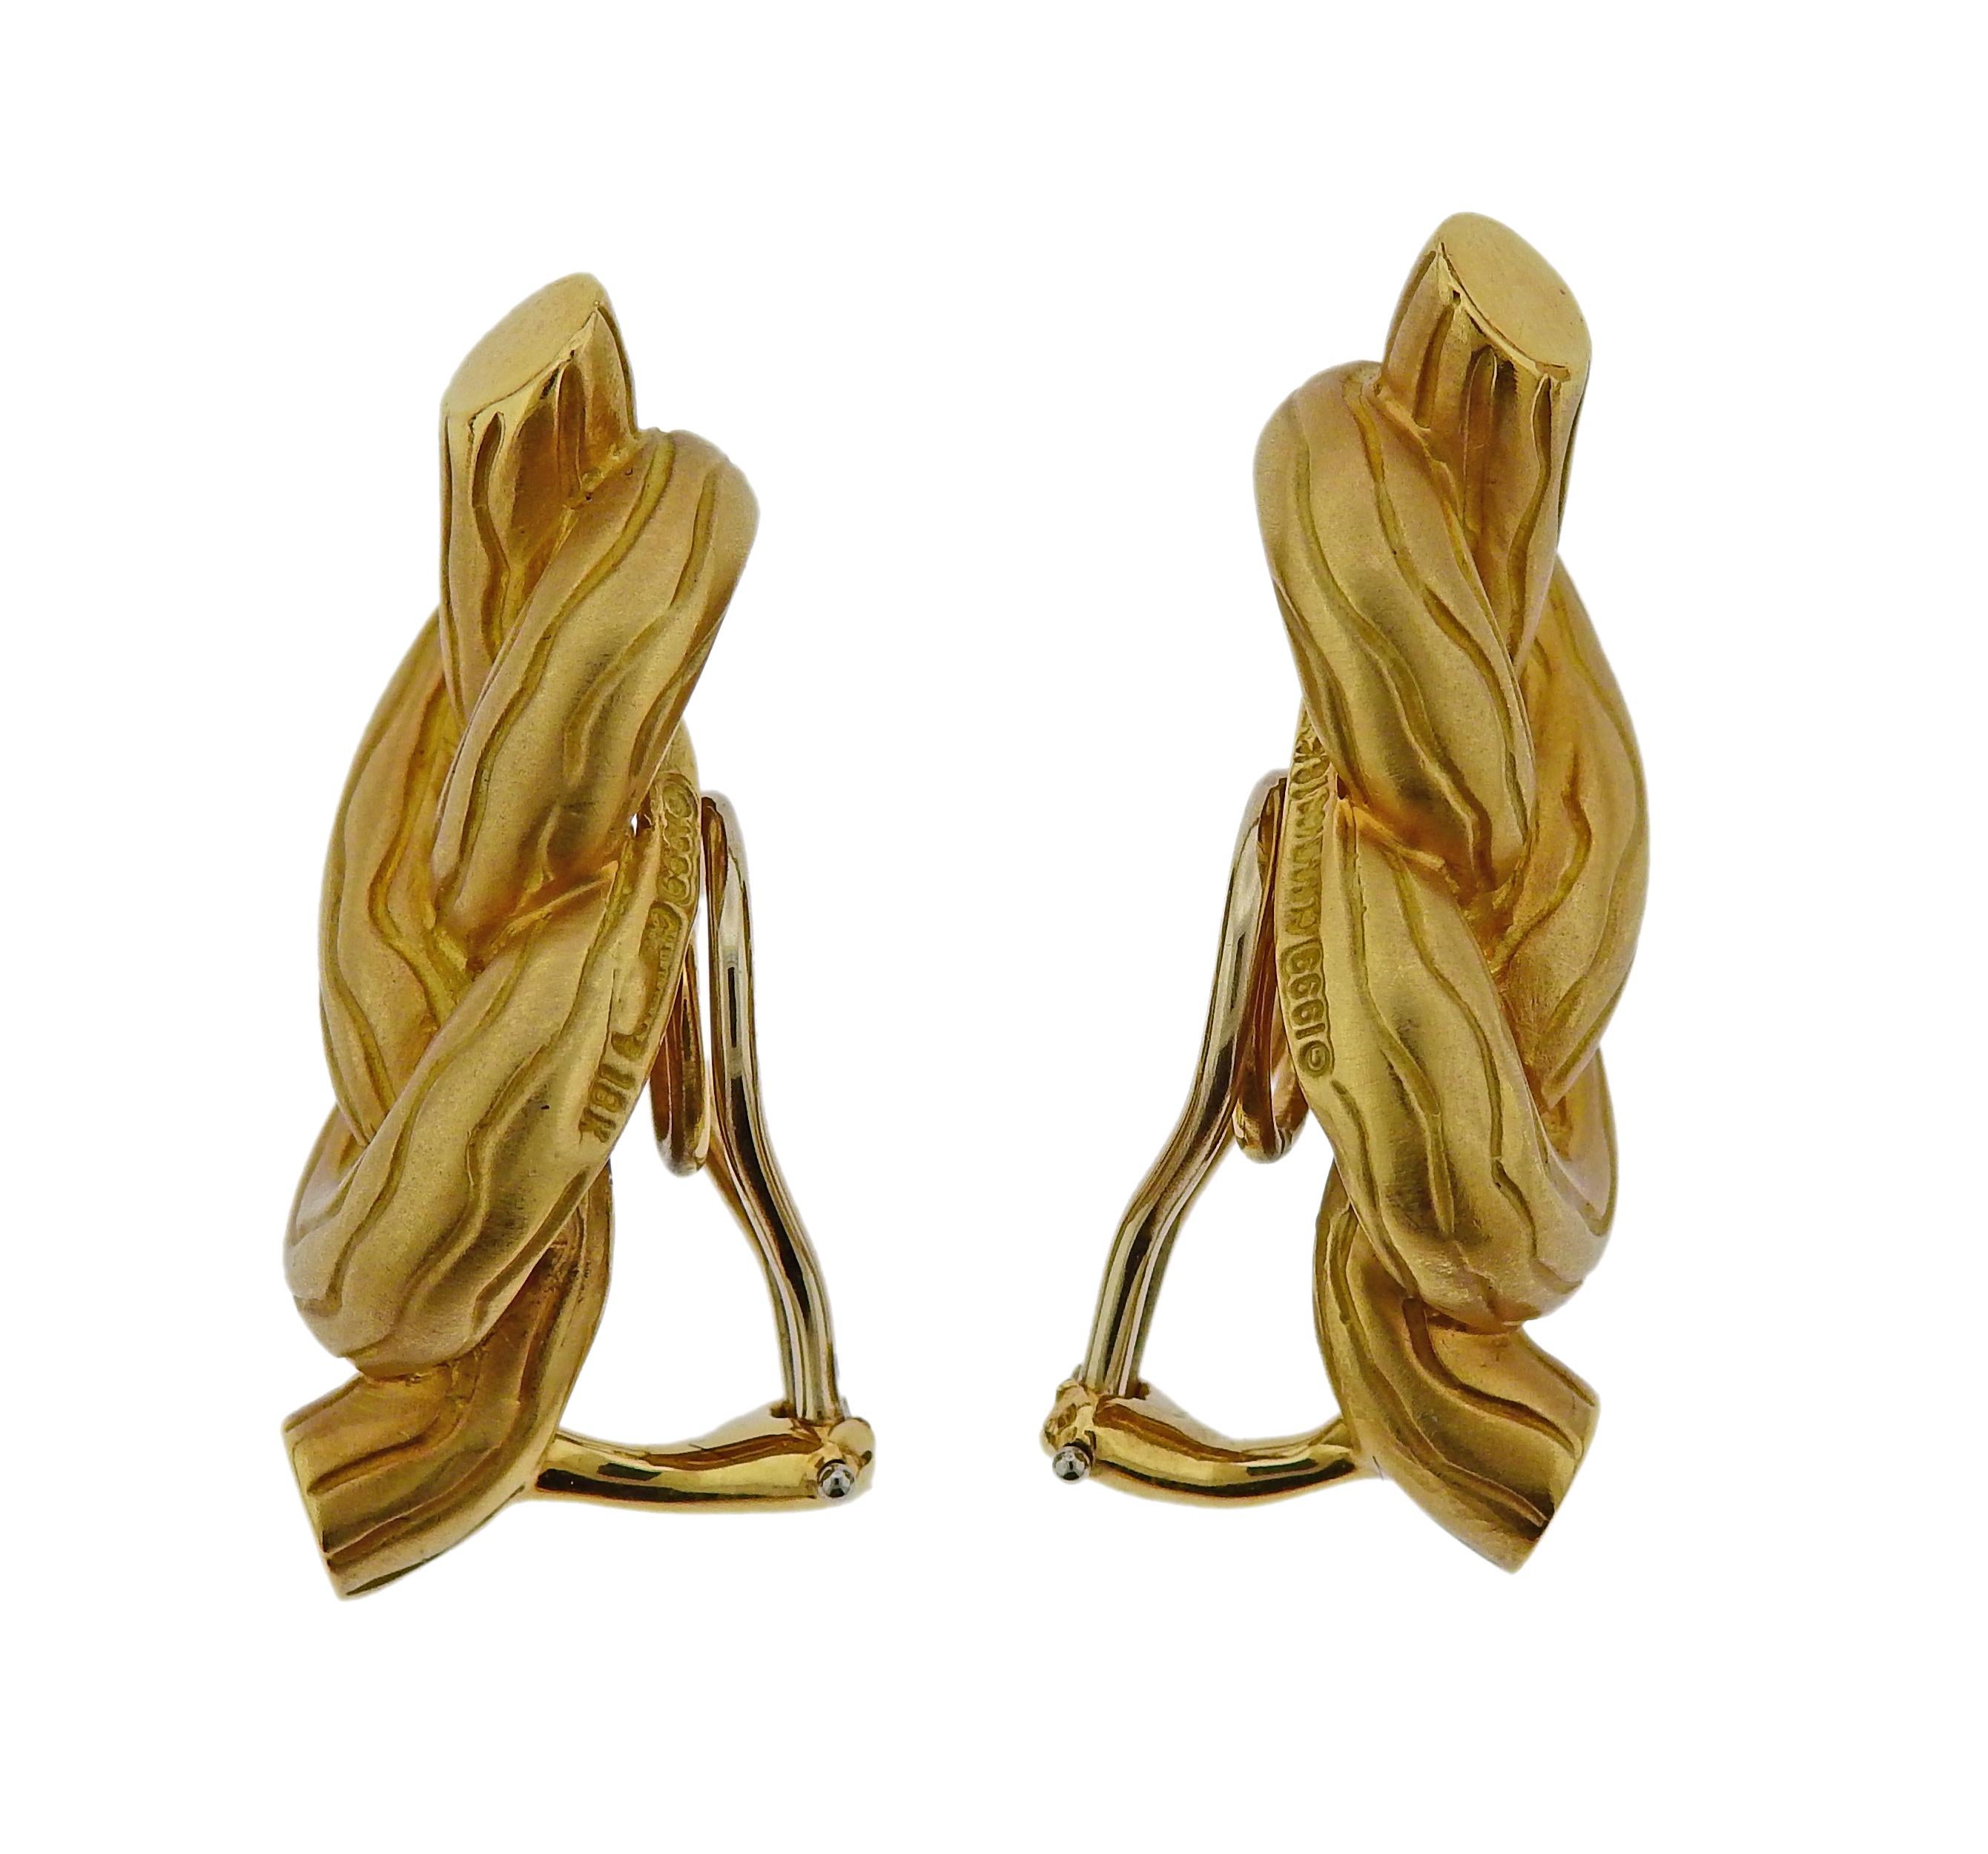 Angela Cummings Pretzel Knot Gold Necklace Earrings Suite In Excellent Condition For Sale In Lambertville, NJ